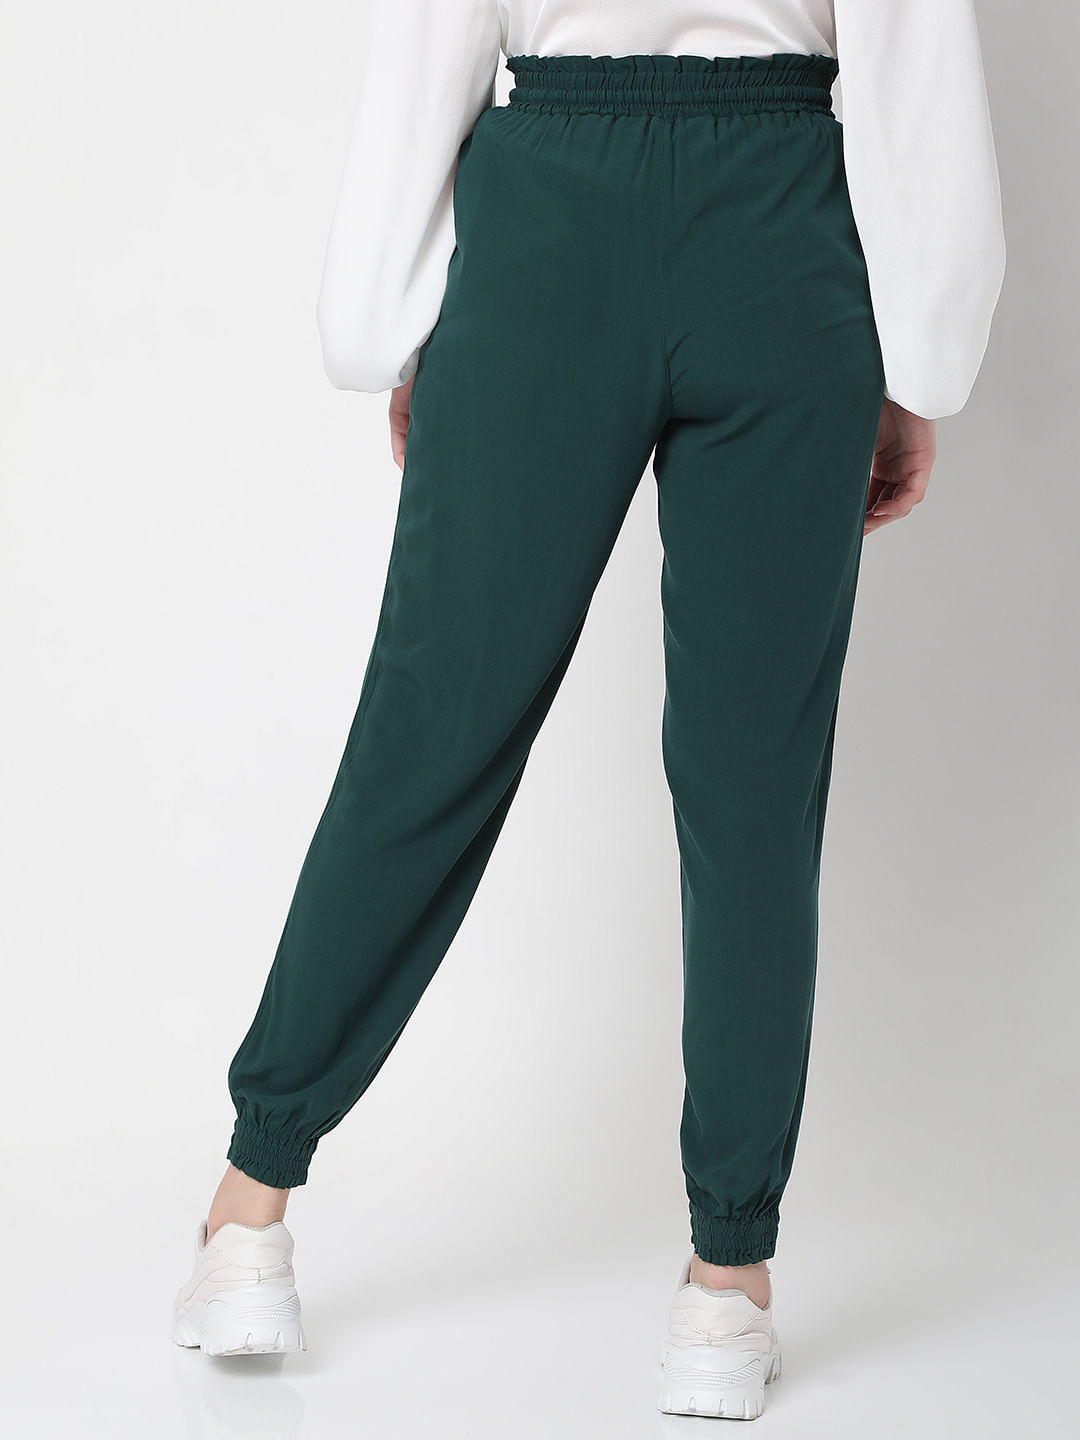 Men's Jogger Pant – Dark Green – Moose Clothing Company